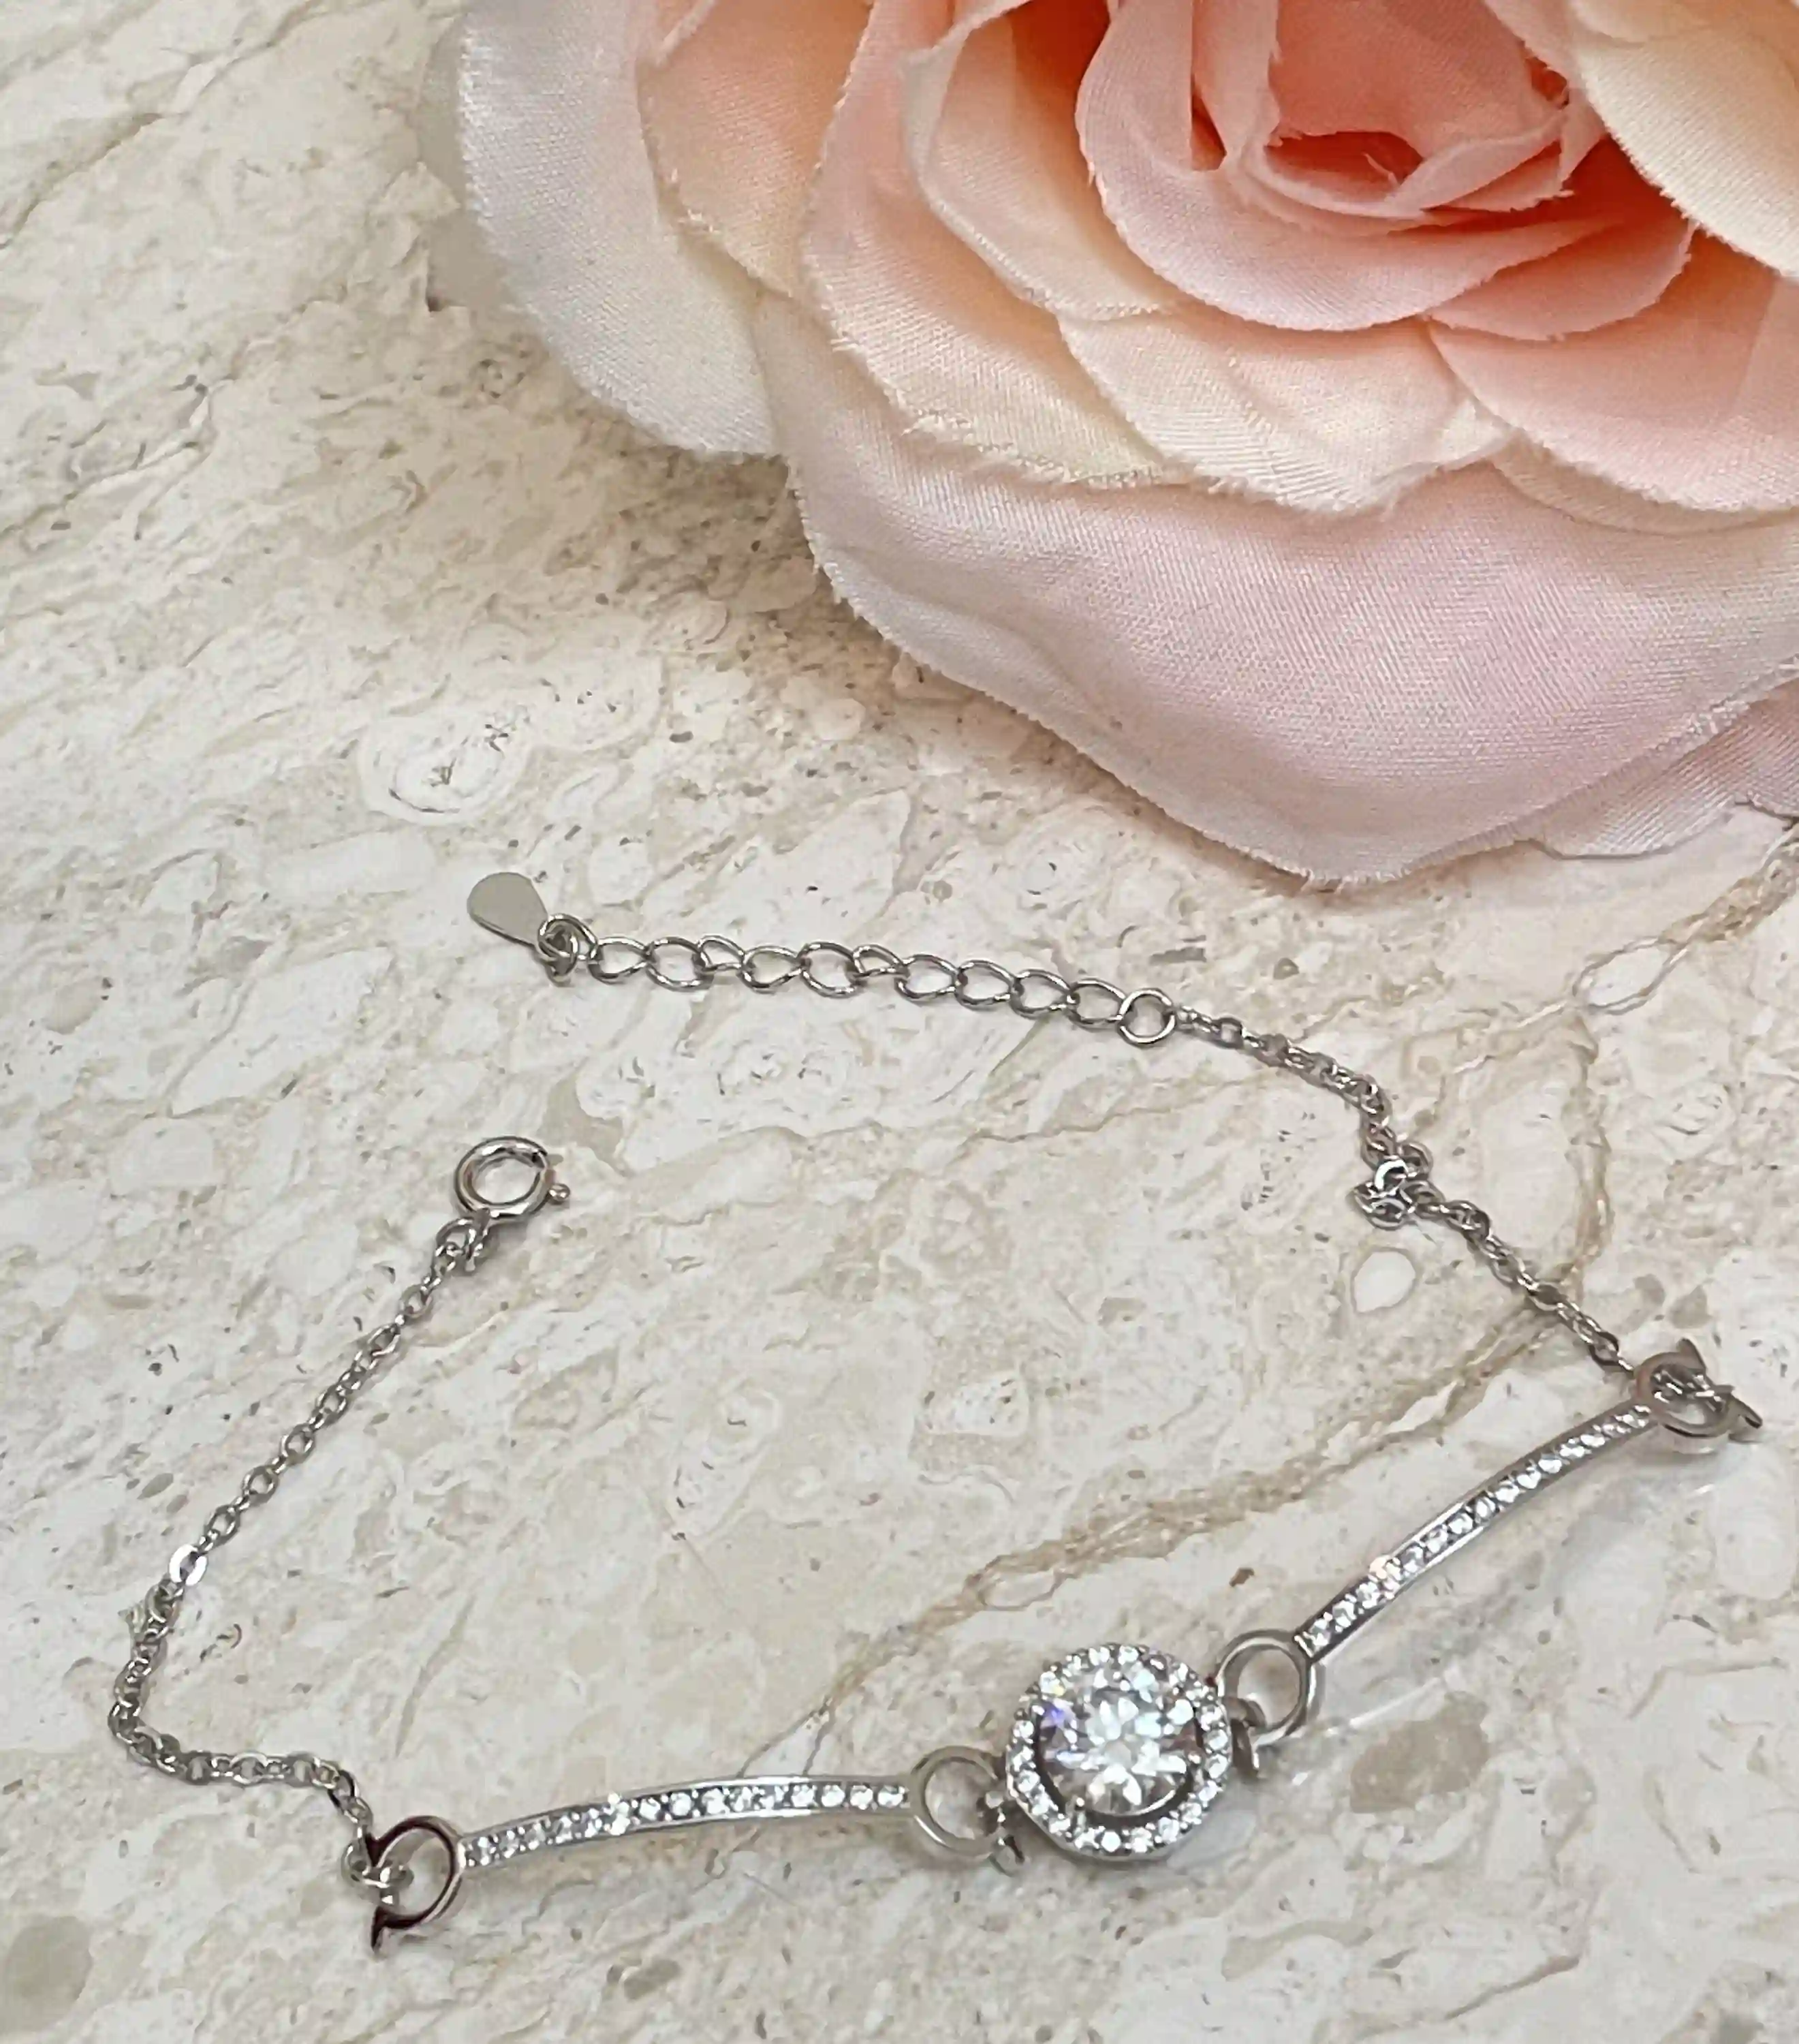 Î©mega Diamond Bracelet Pave Diamond Jewelry Adjustable bracelet 925 Sterling Silver Fine Jewelry Forever Love Gifts for her Valentine's Day 